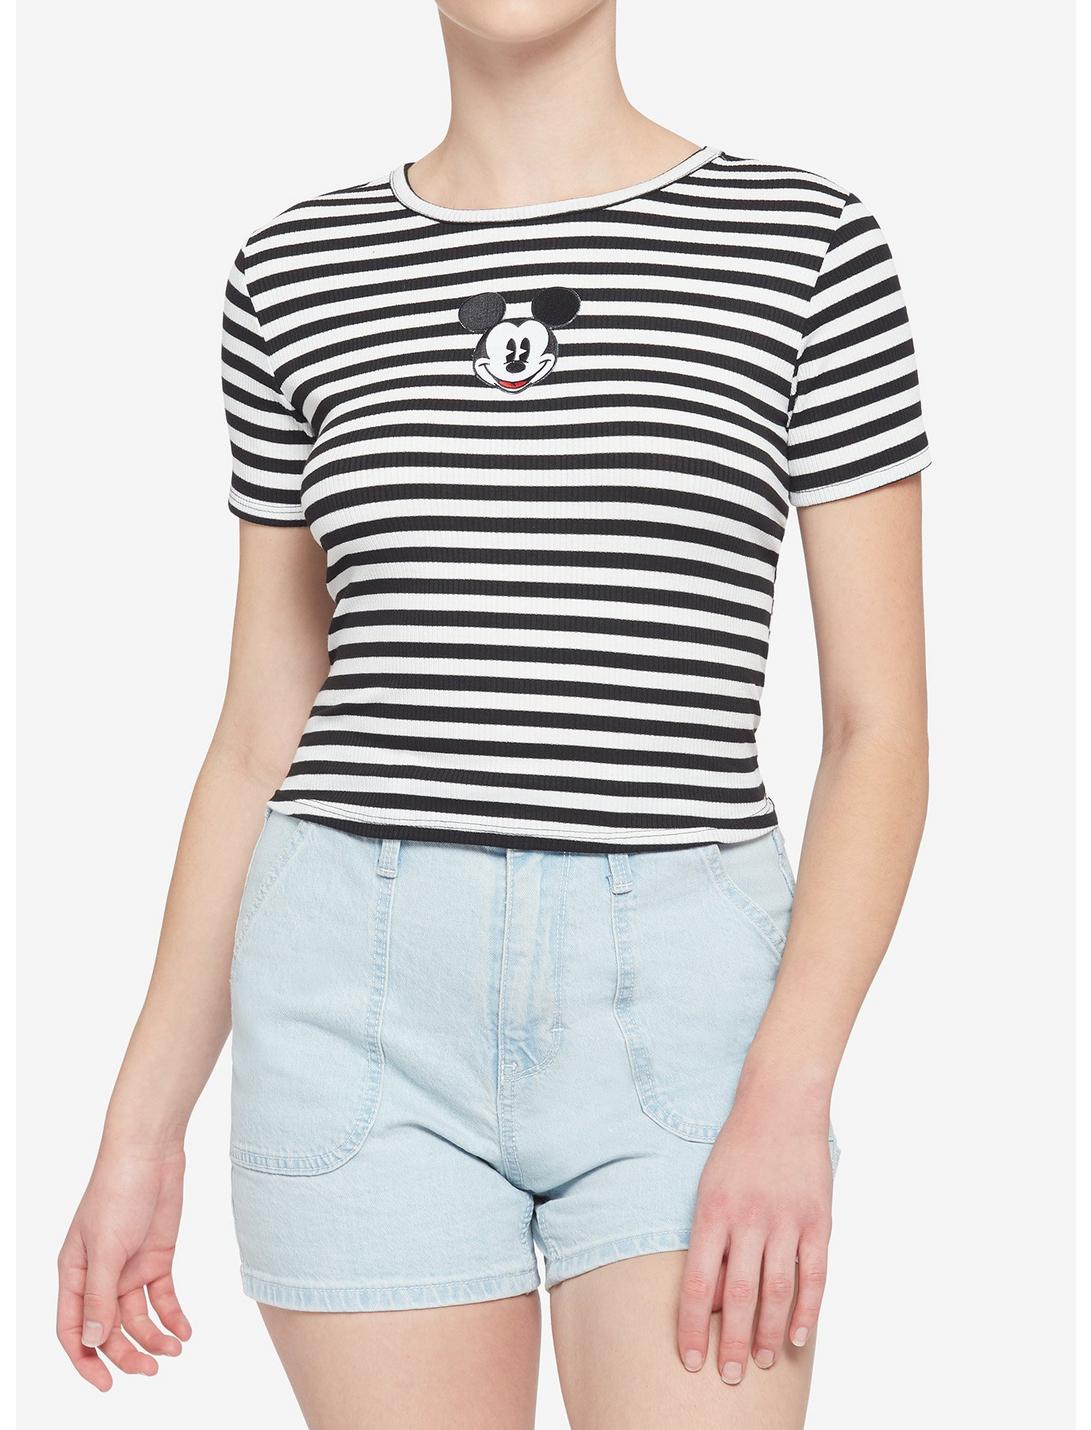 Disney Mickey Mouse Black & White Stripe Girls Baby T-Shirt, WHITE, hi-res